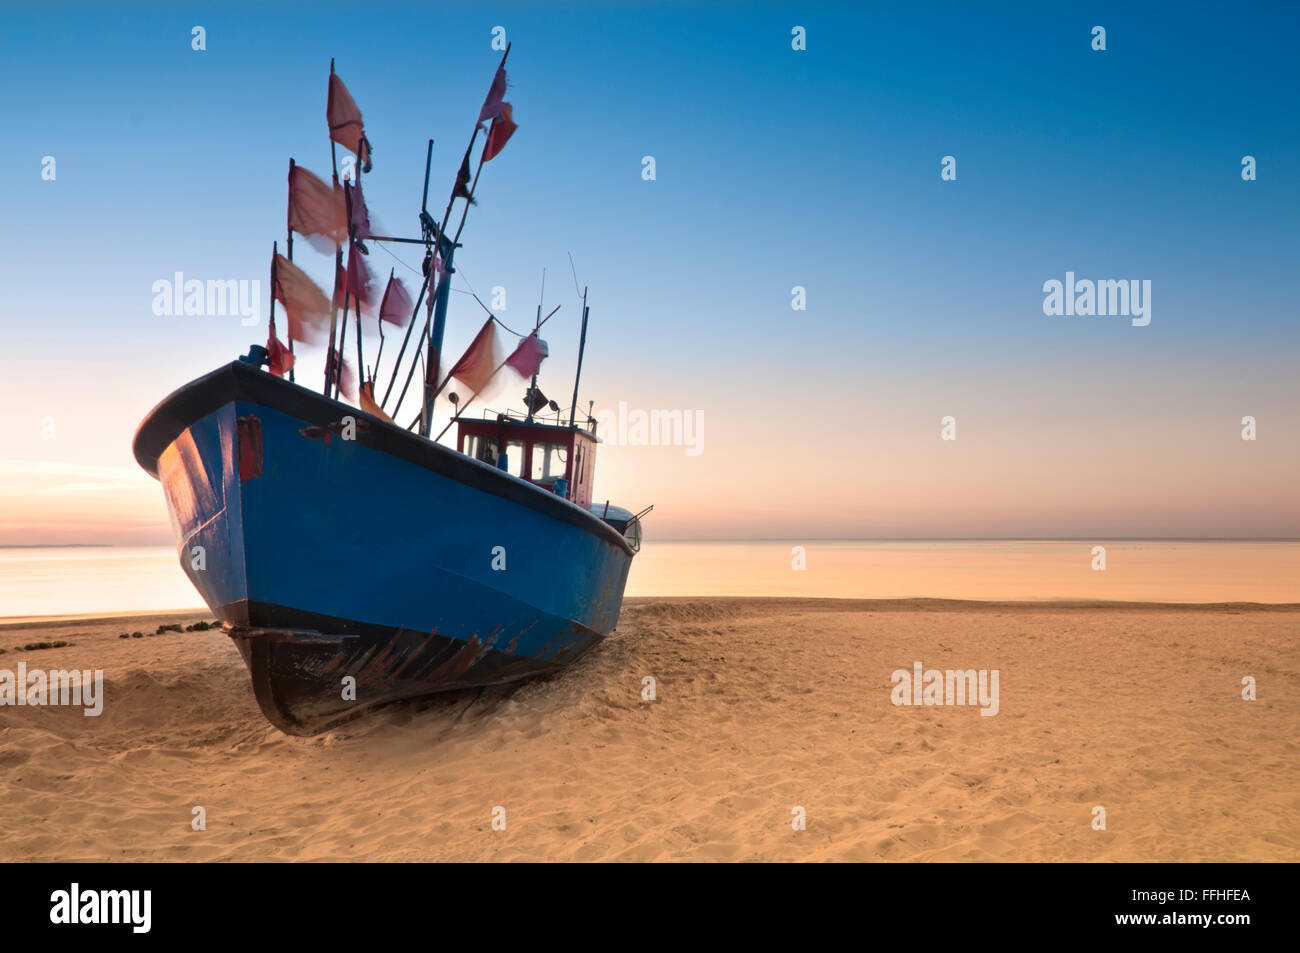 Fishing boat on the sandy beach of Baltic Sea coast wallpaper background Stock Photo